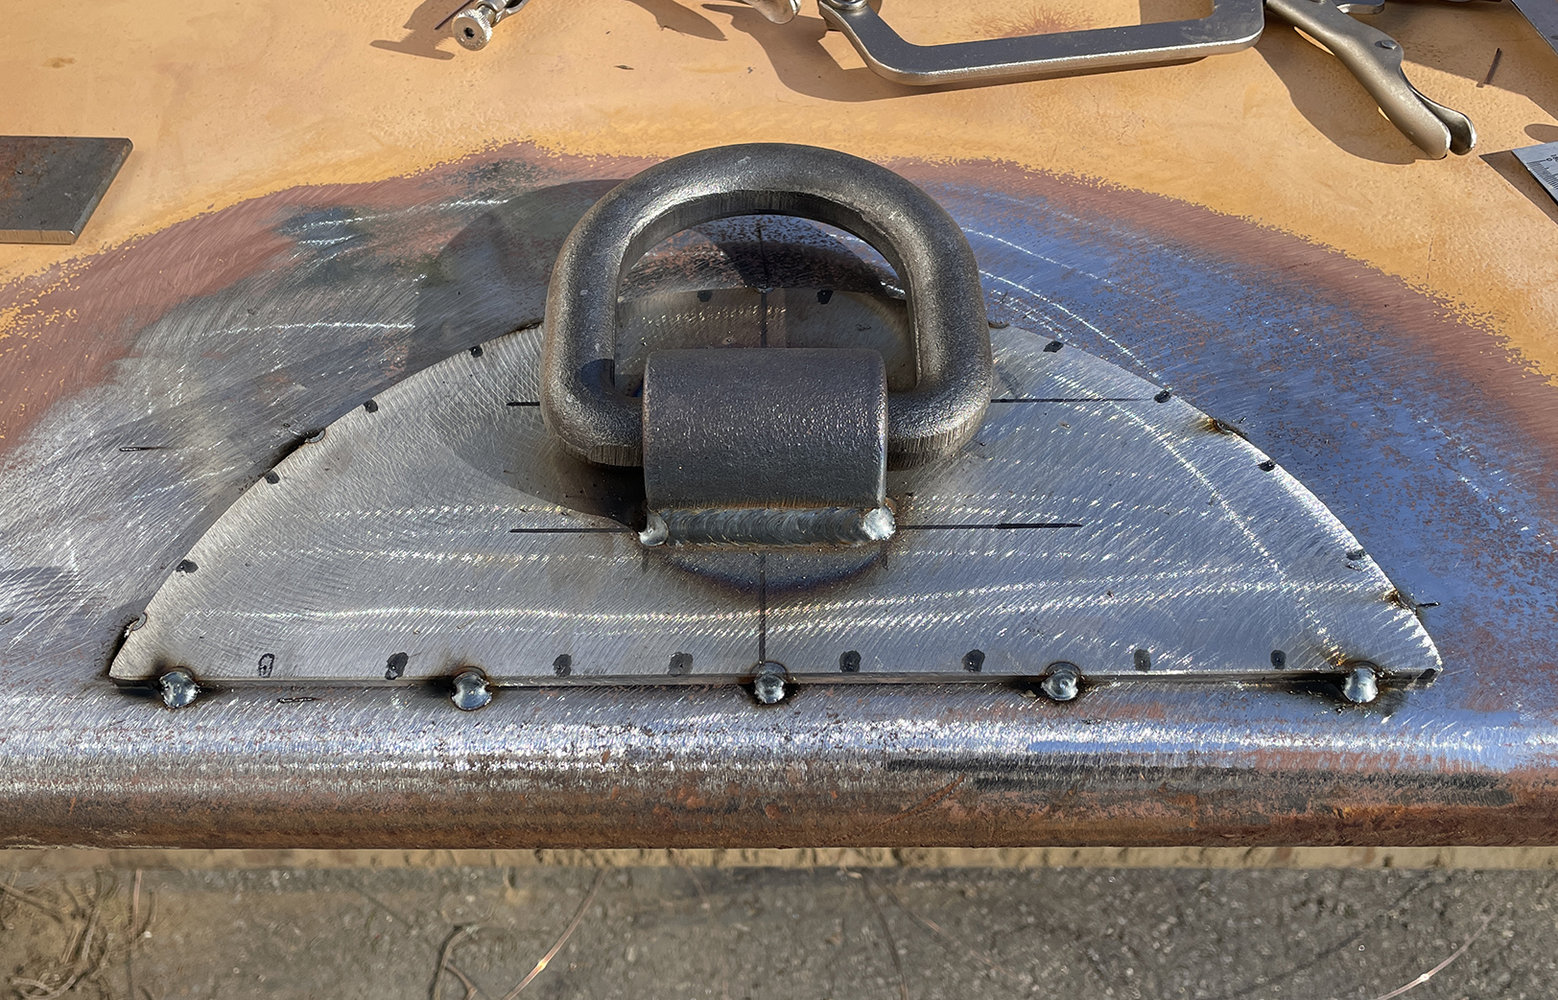 tie-down-ring-welded-onto-plate-smaller-image.jpg